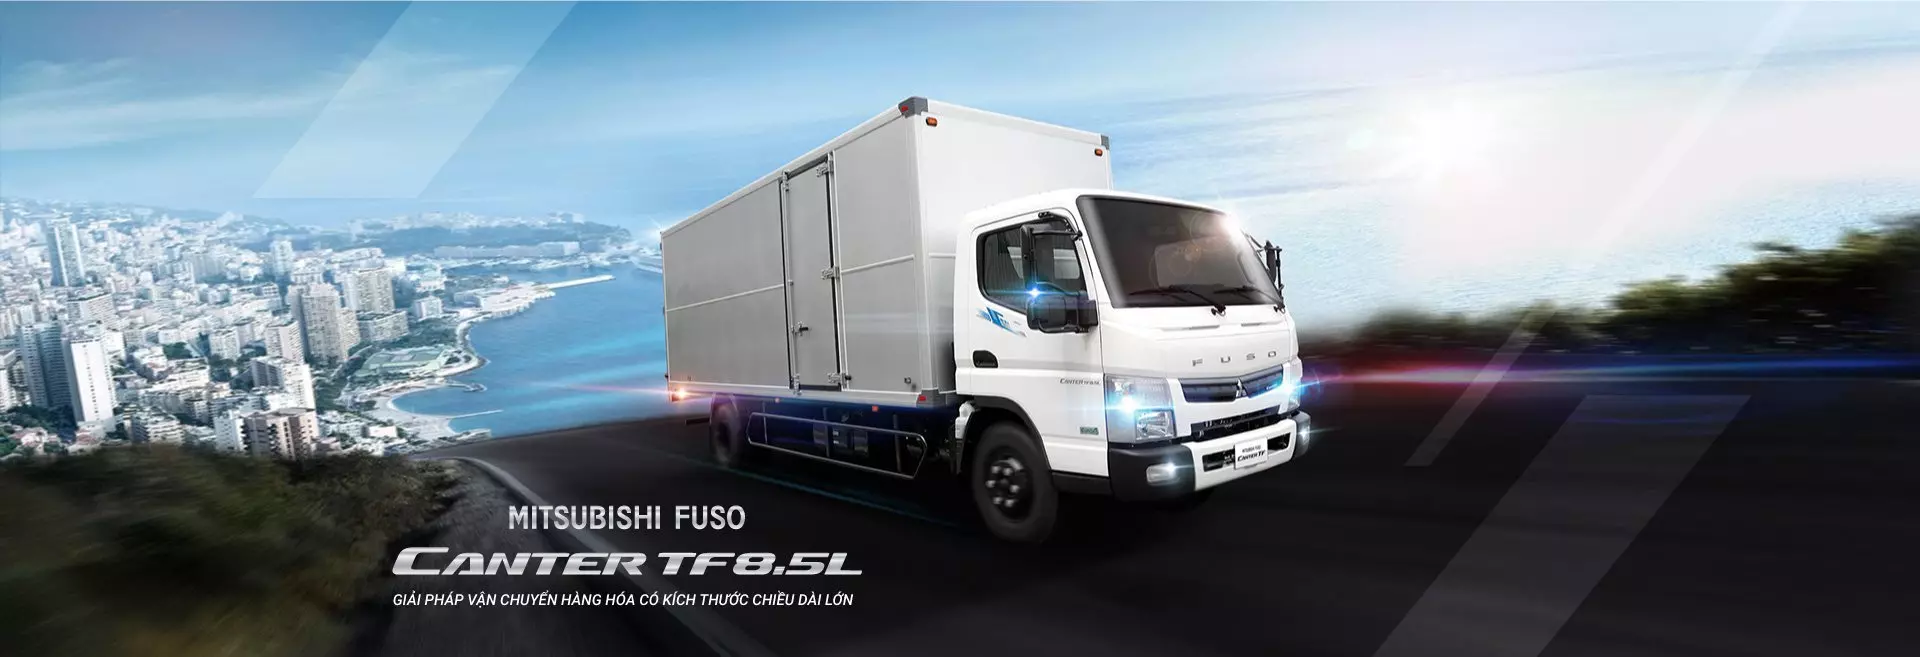 giá xe tải mitsubishi 5 tấn fuso canter tf8.5